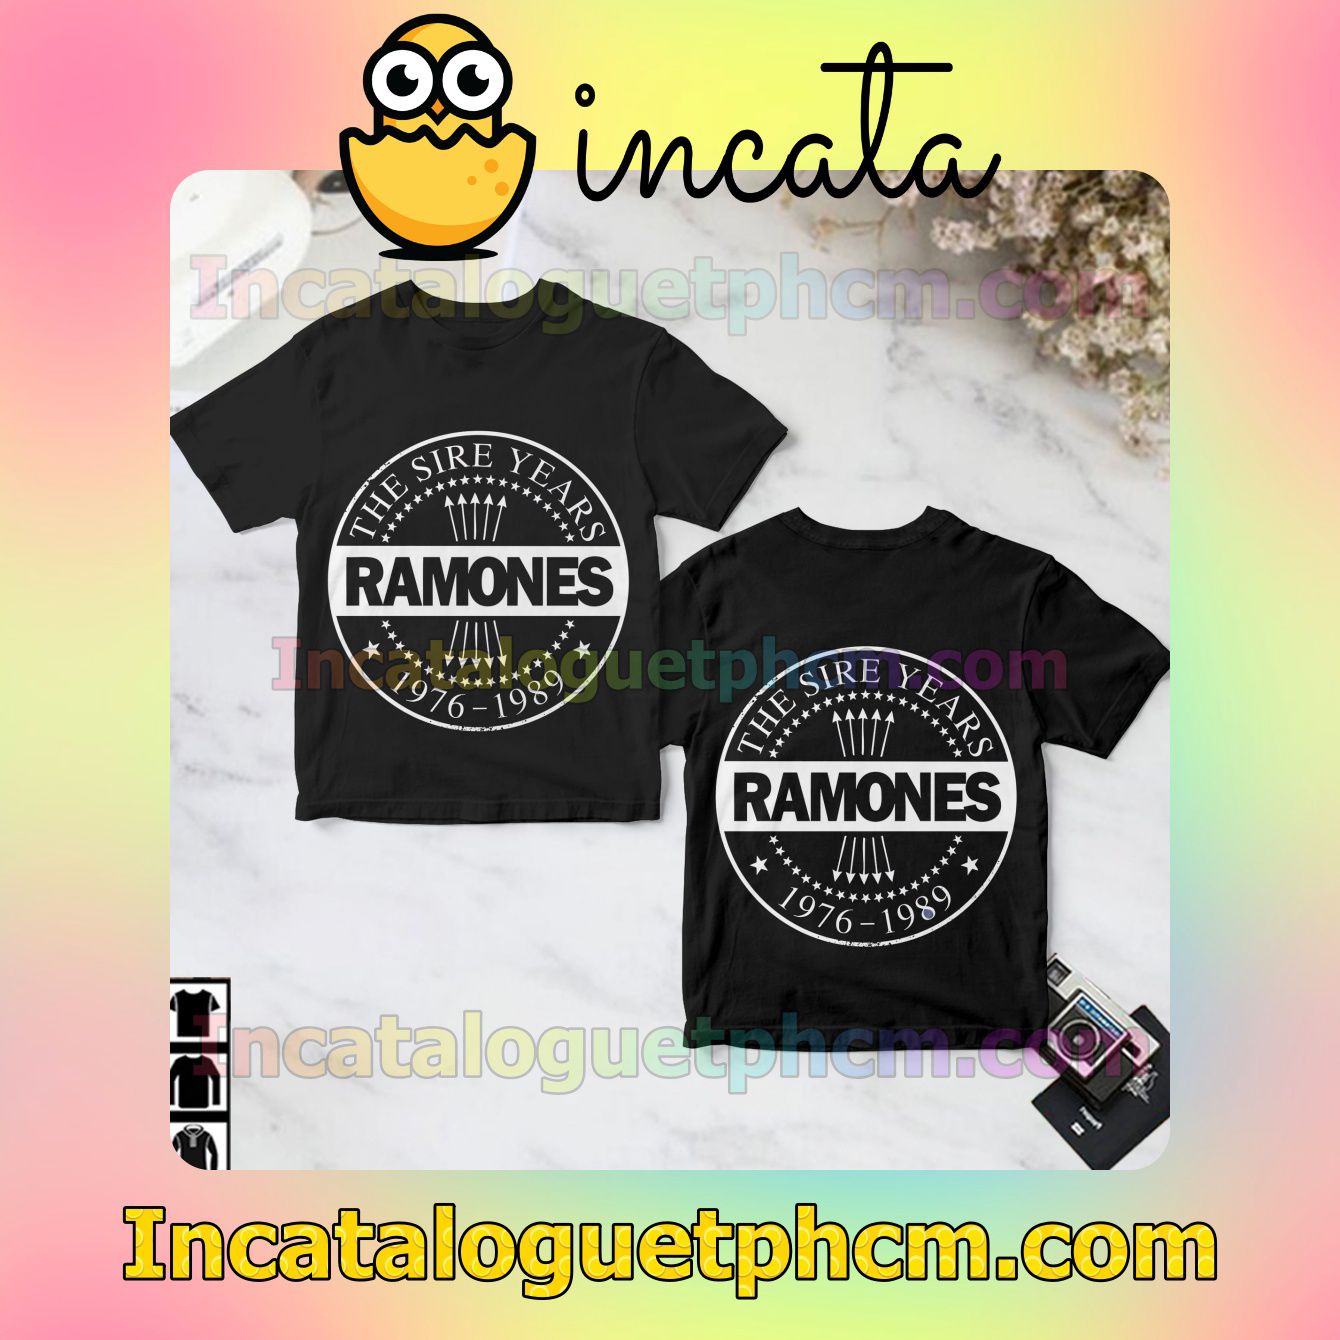 Ramones The Sire Years 1976-1989 Album Cover Black Gift Shirt